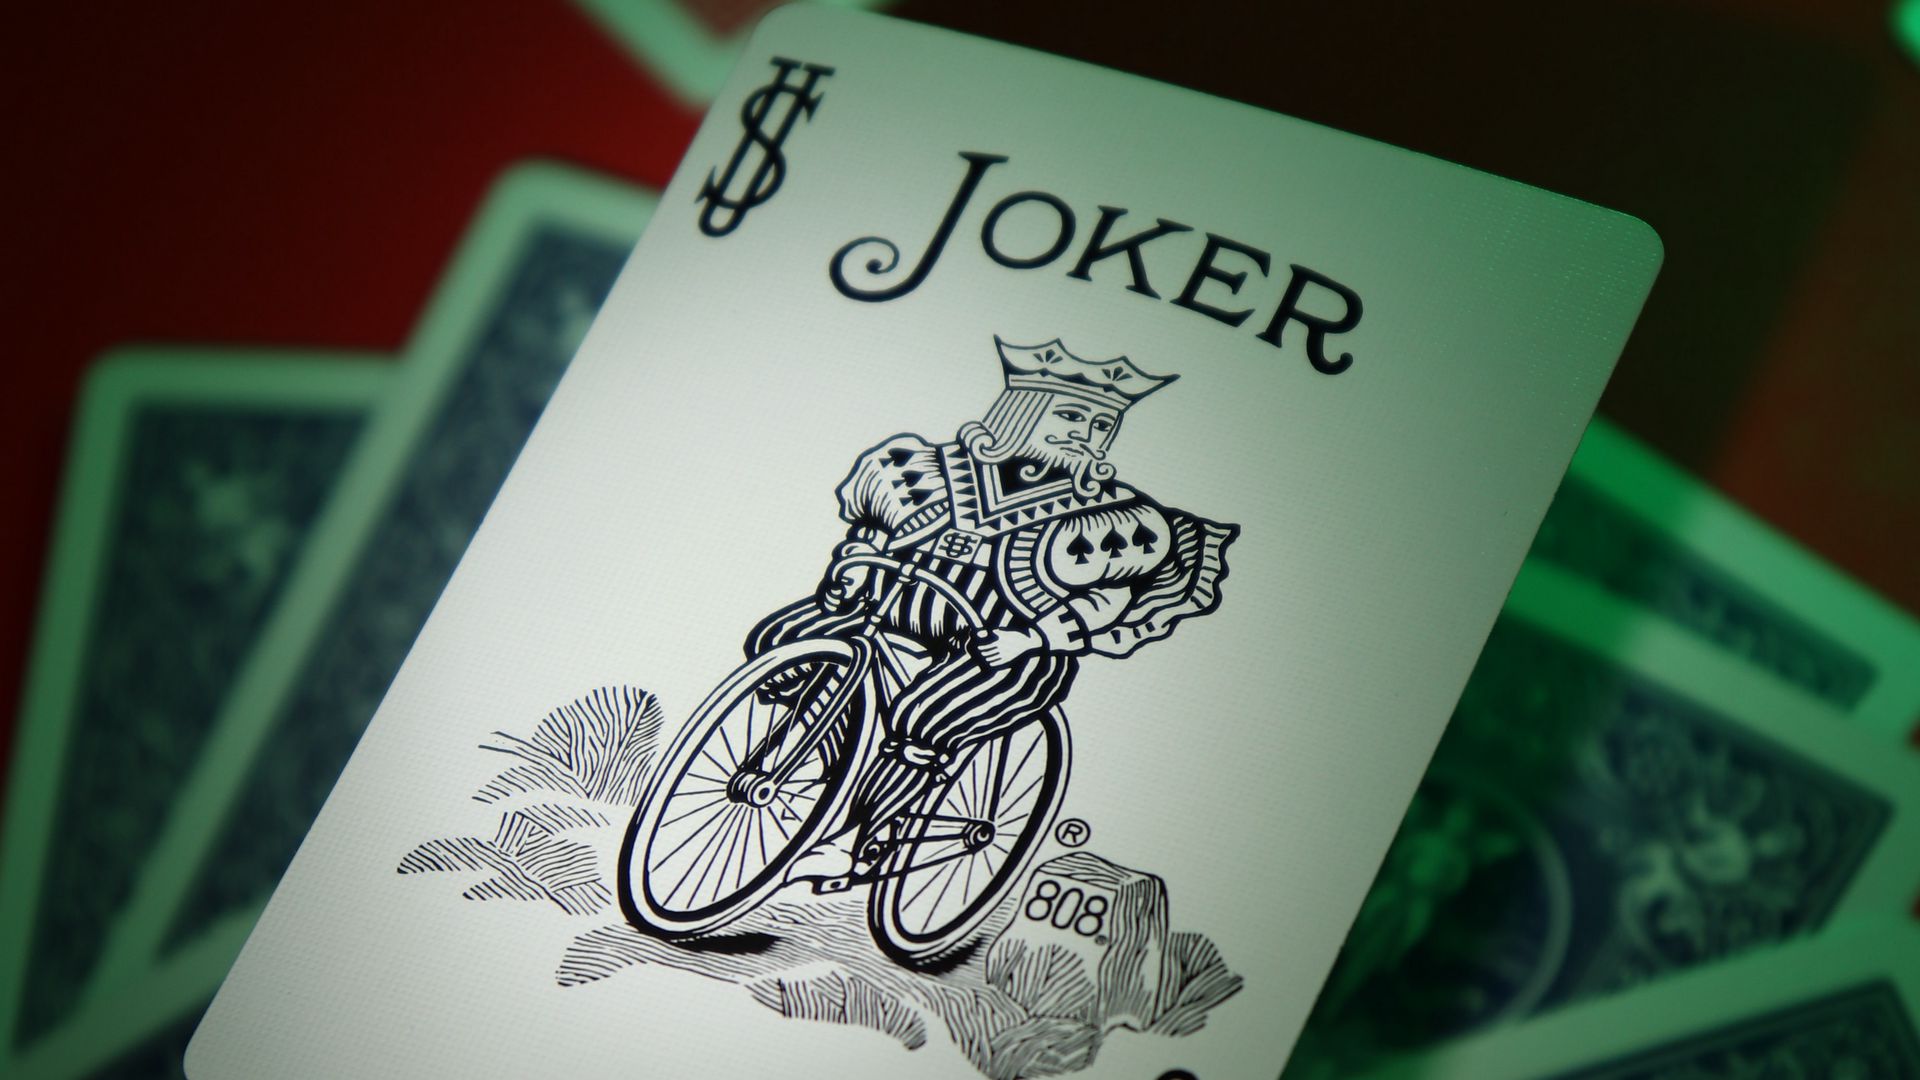 1920x1080 Wallpaper joker, word, inscription, cards